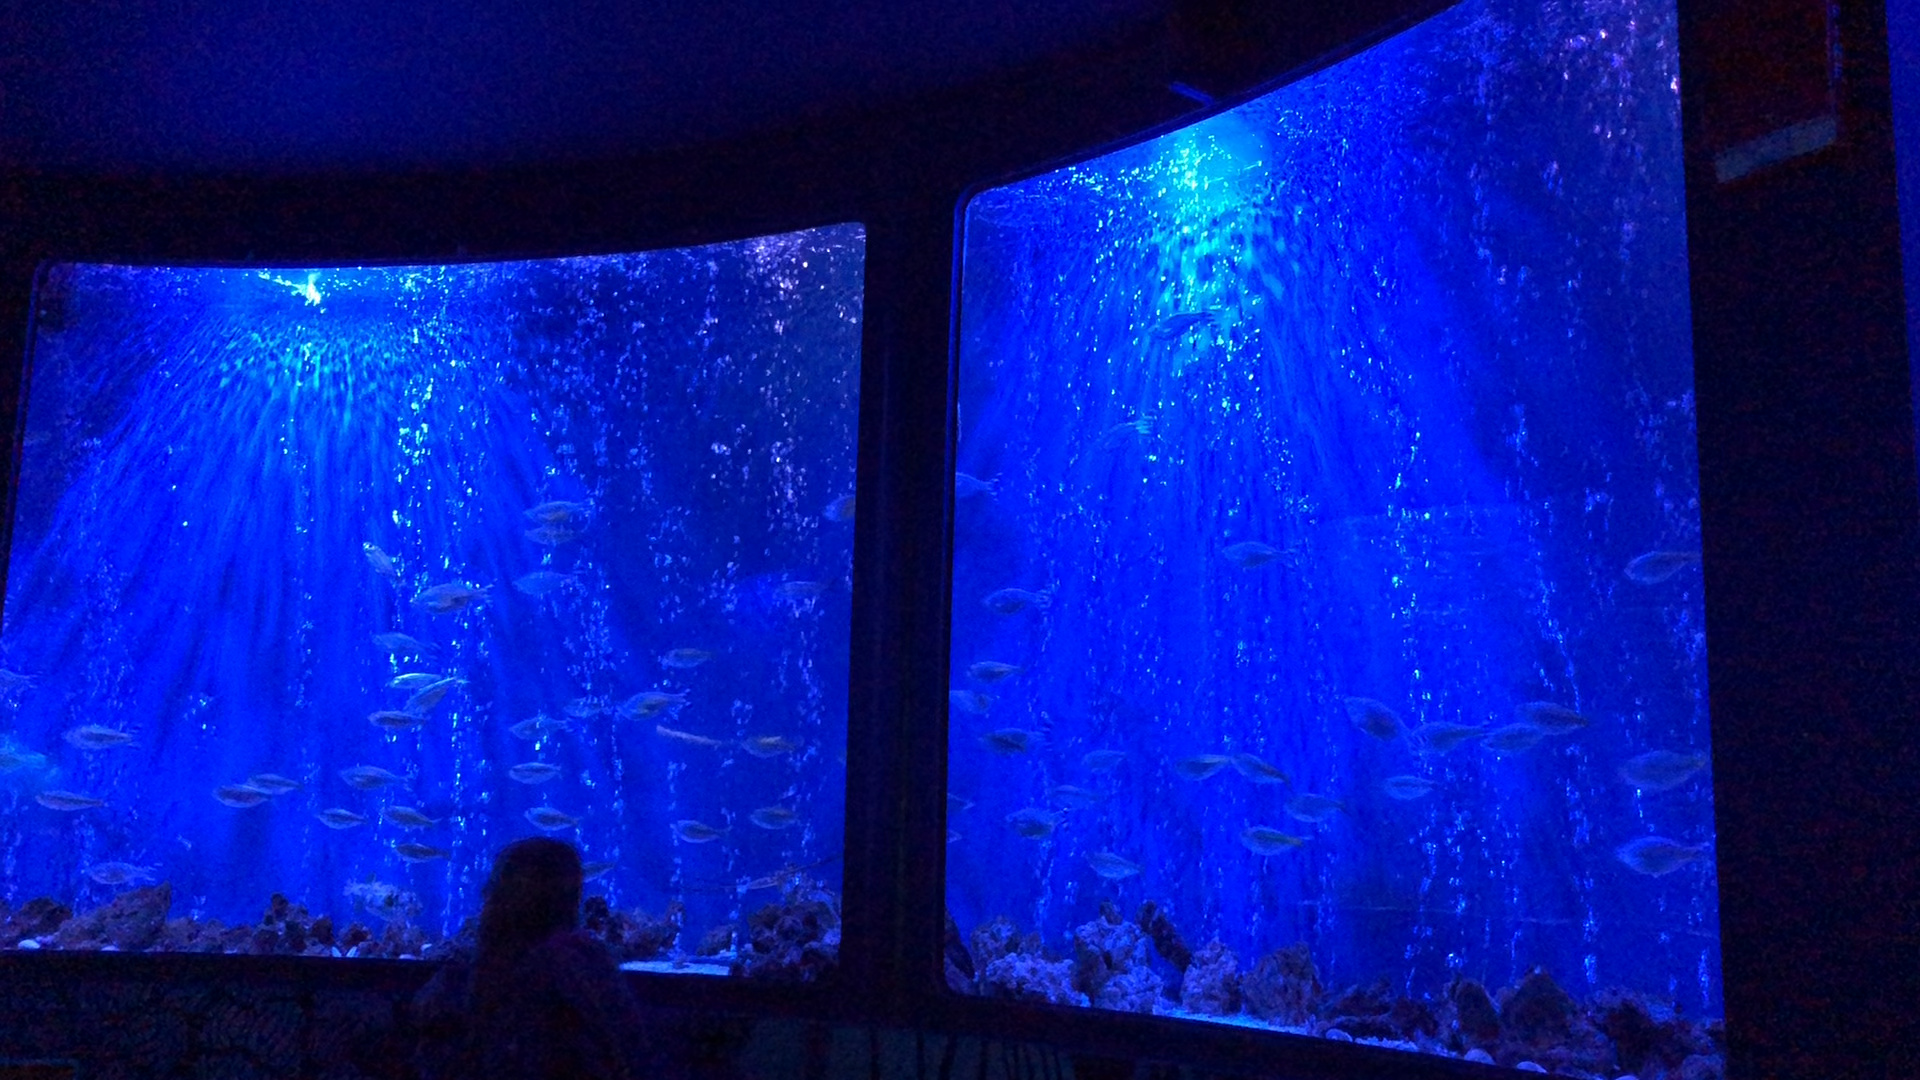 Sea life aquarium Auburn Hills